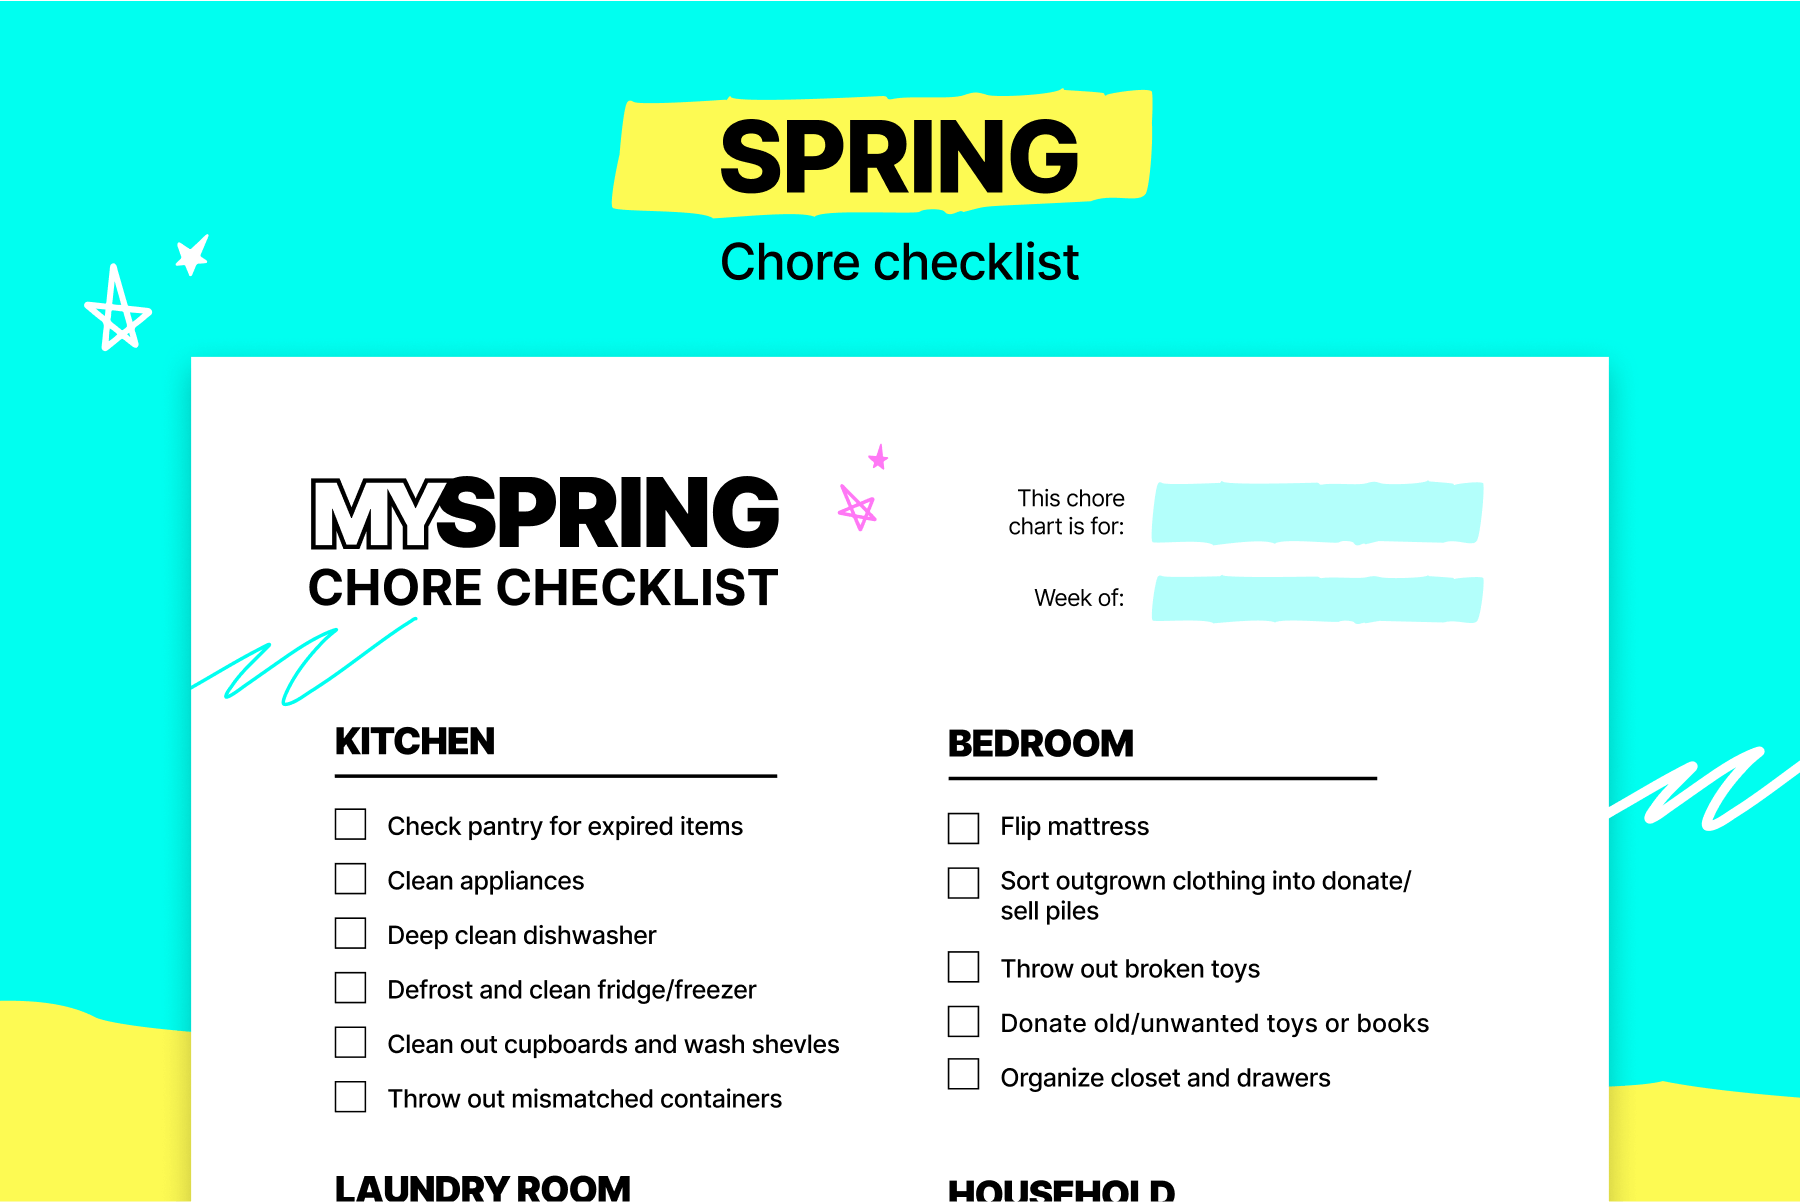 Spring chore checklist